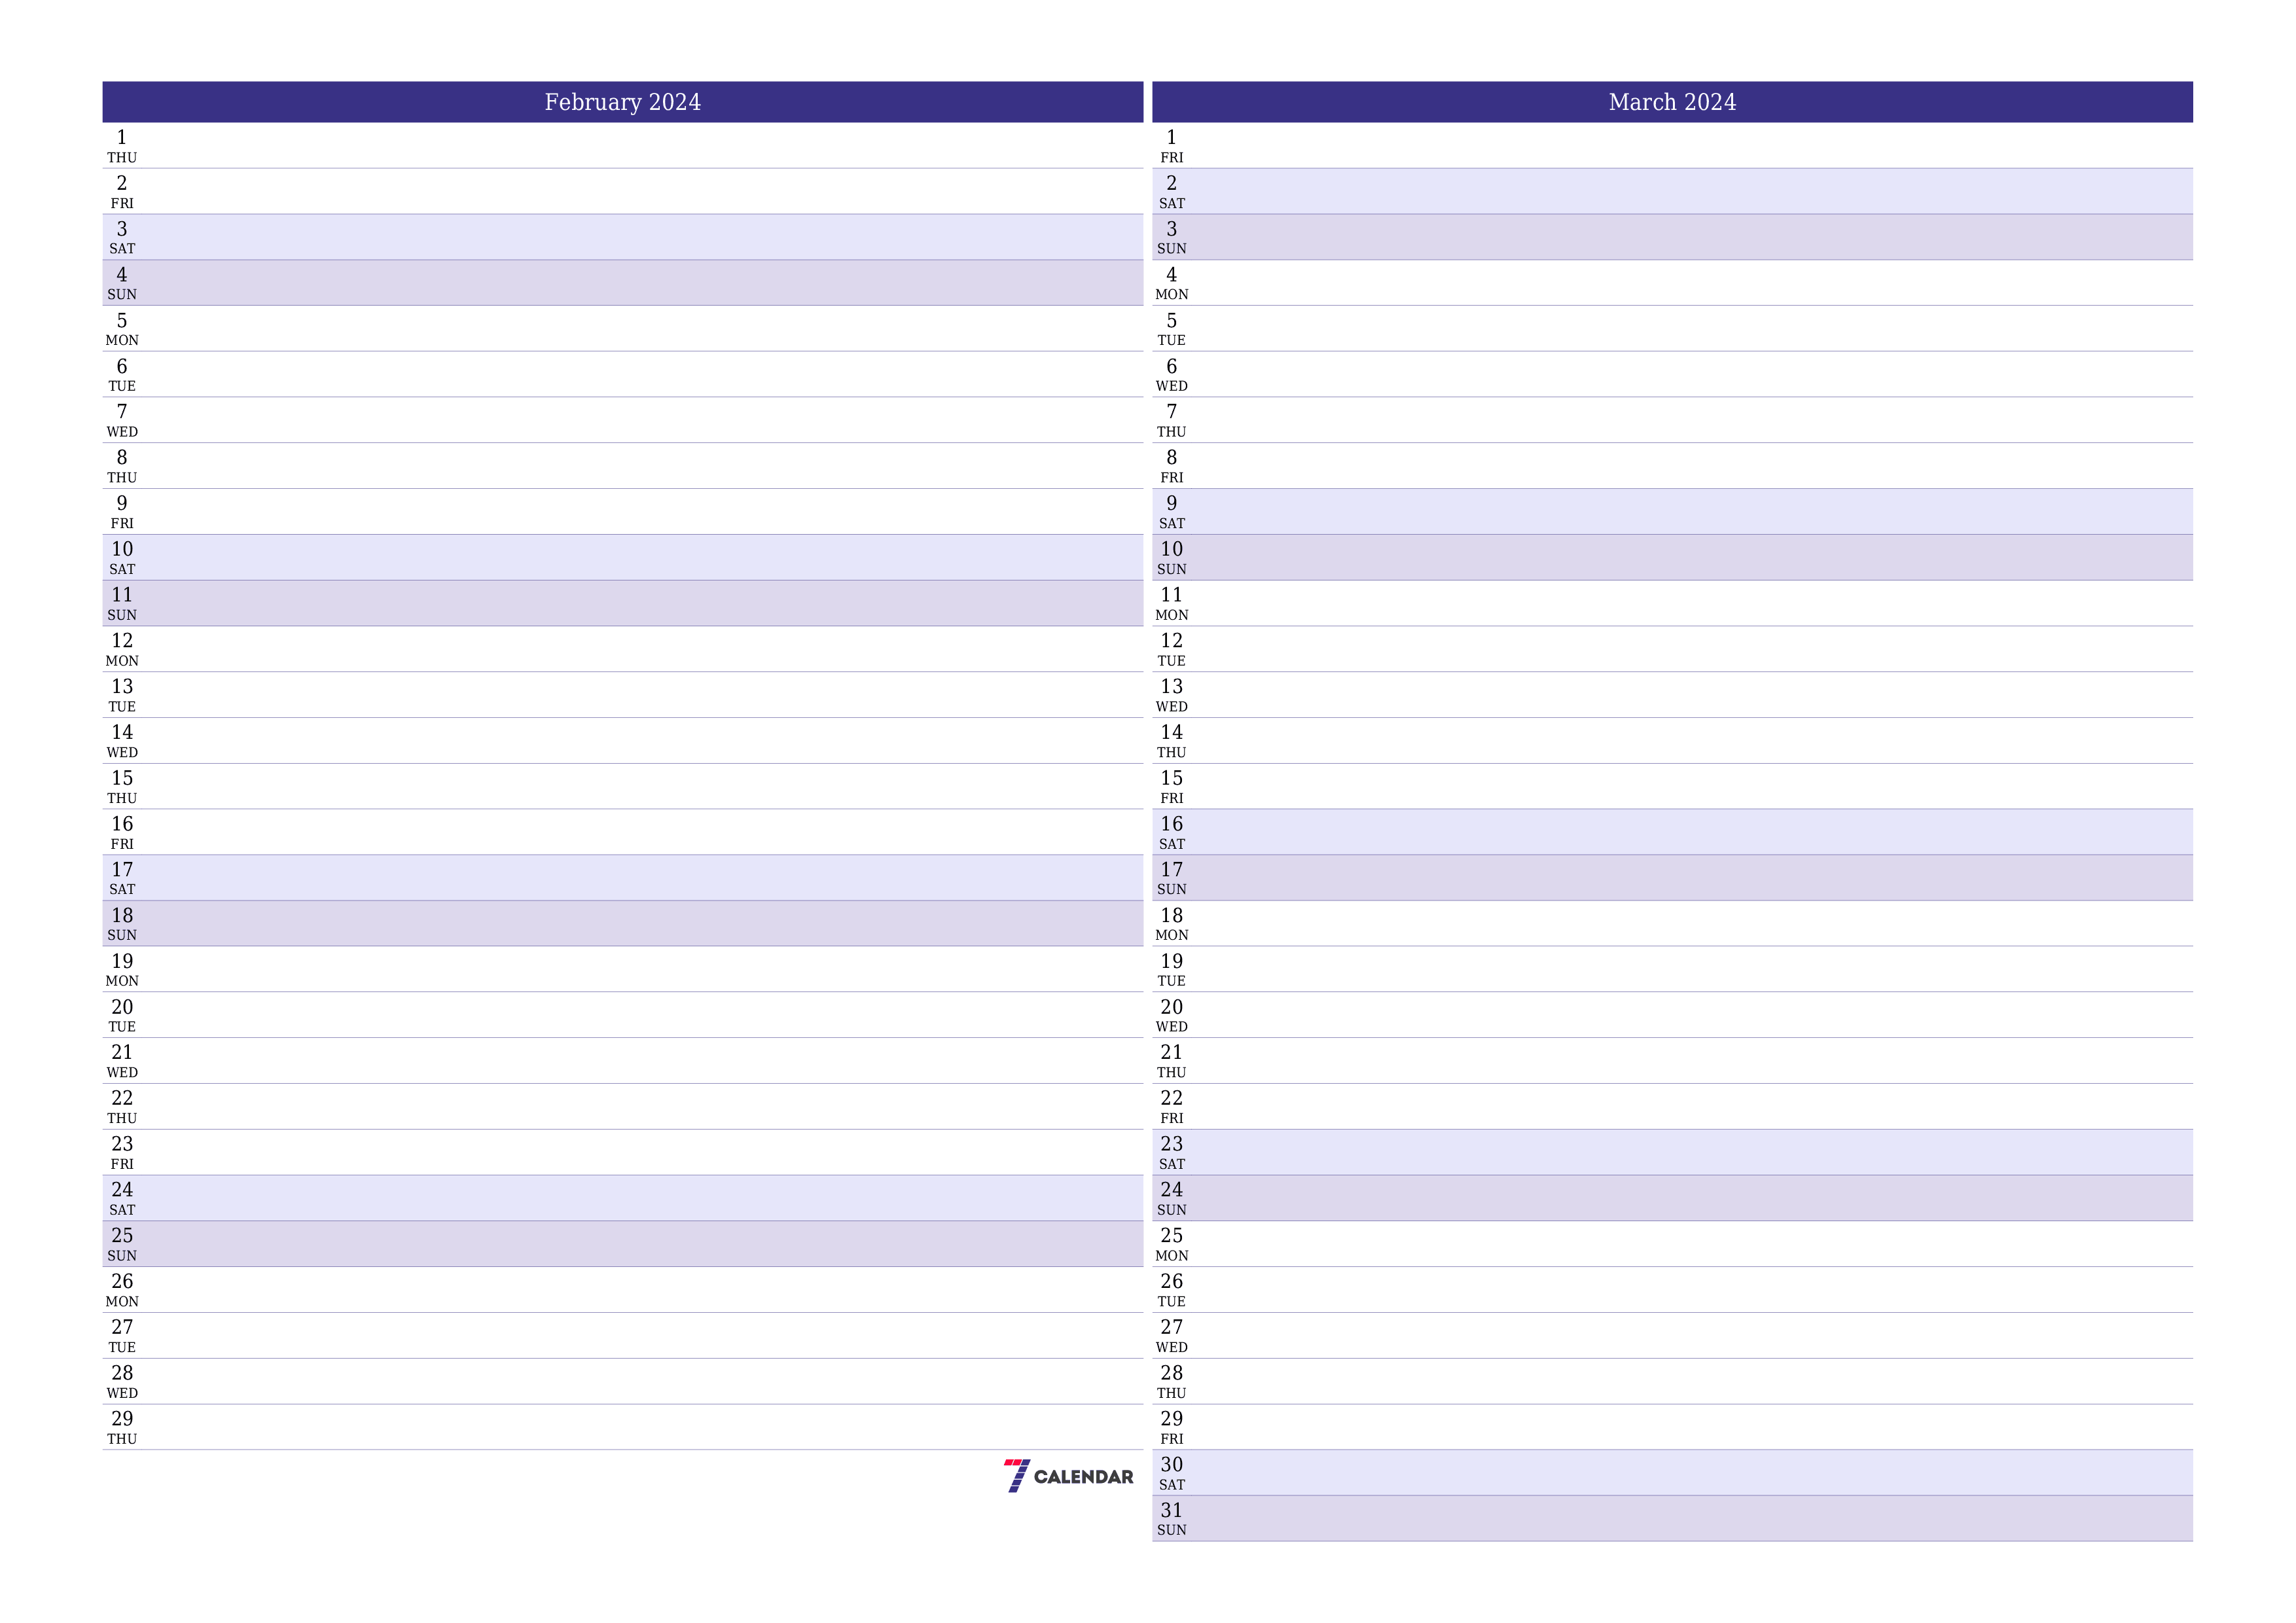 Blank calendar February 2024